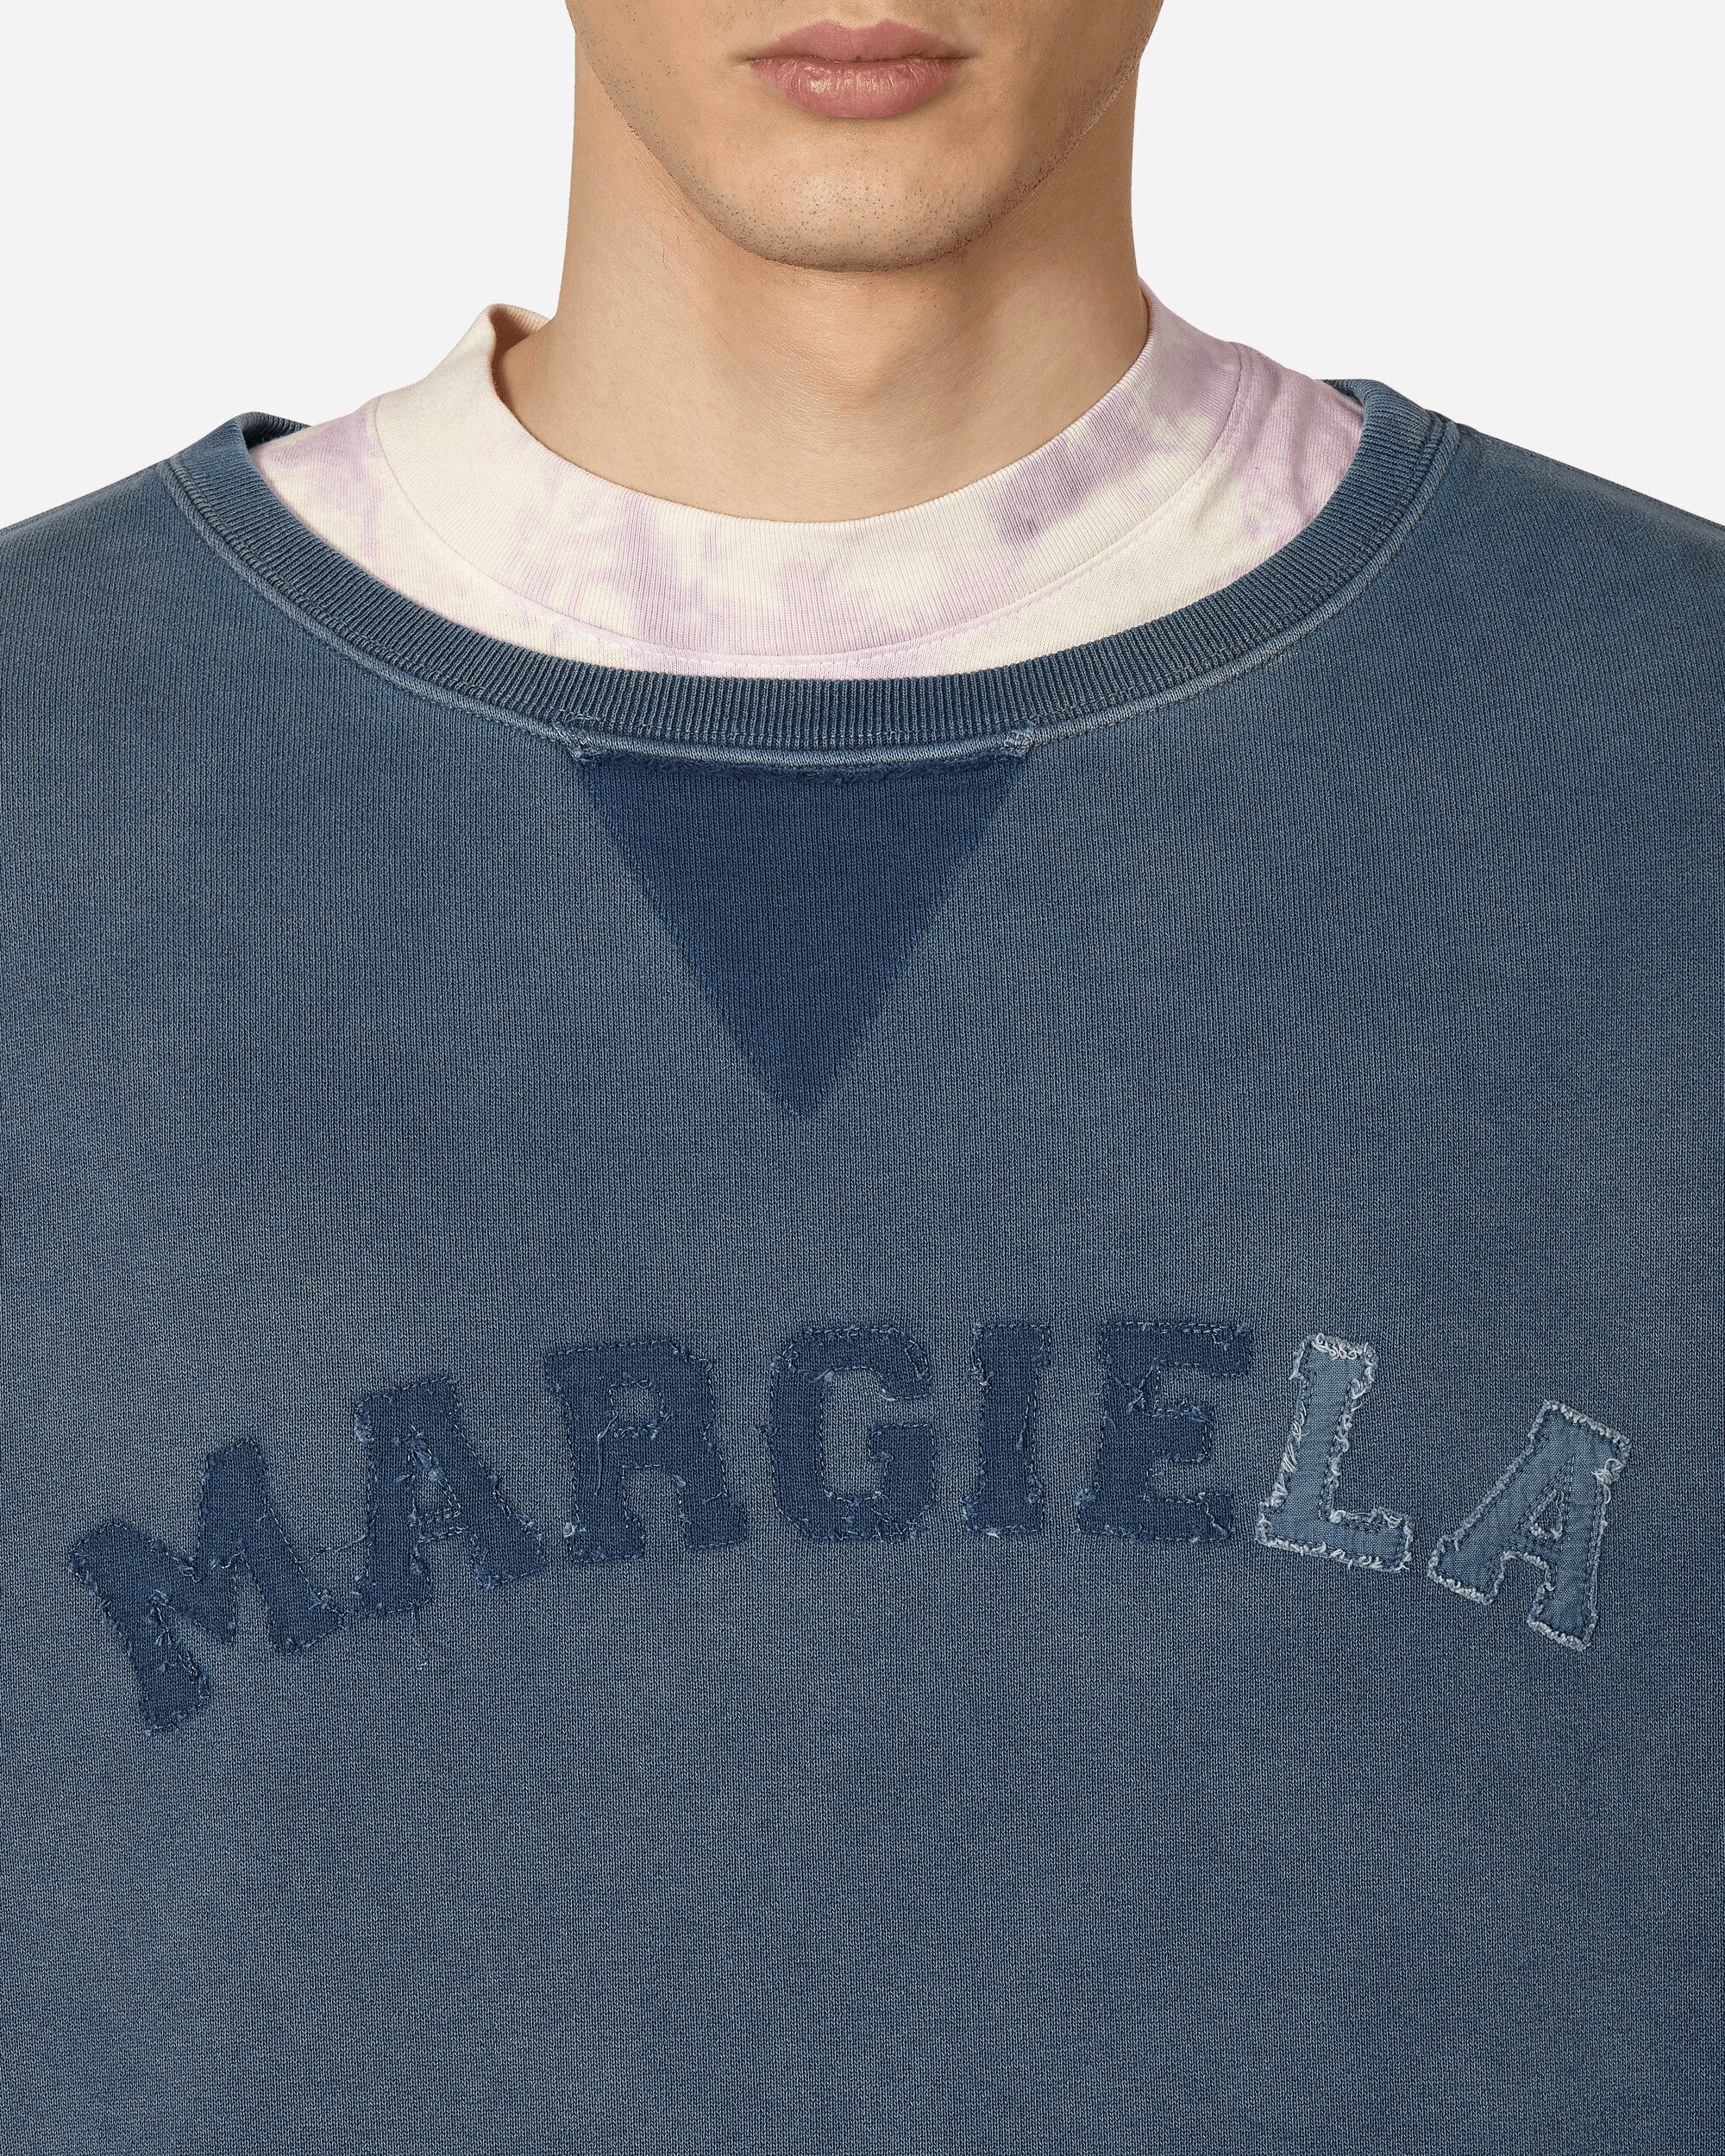 Maison Margiela Felpa Blue Sweatshirts Crewneck S50GU0209 469